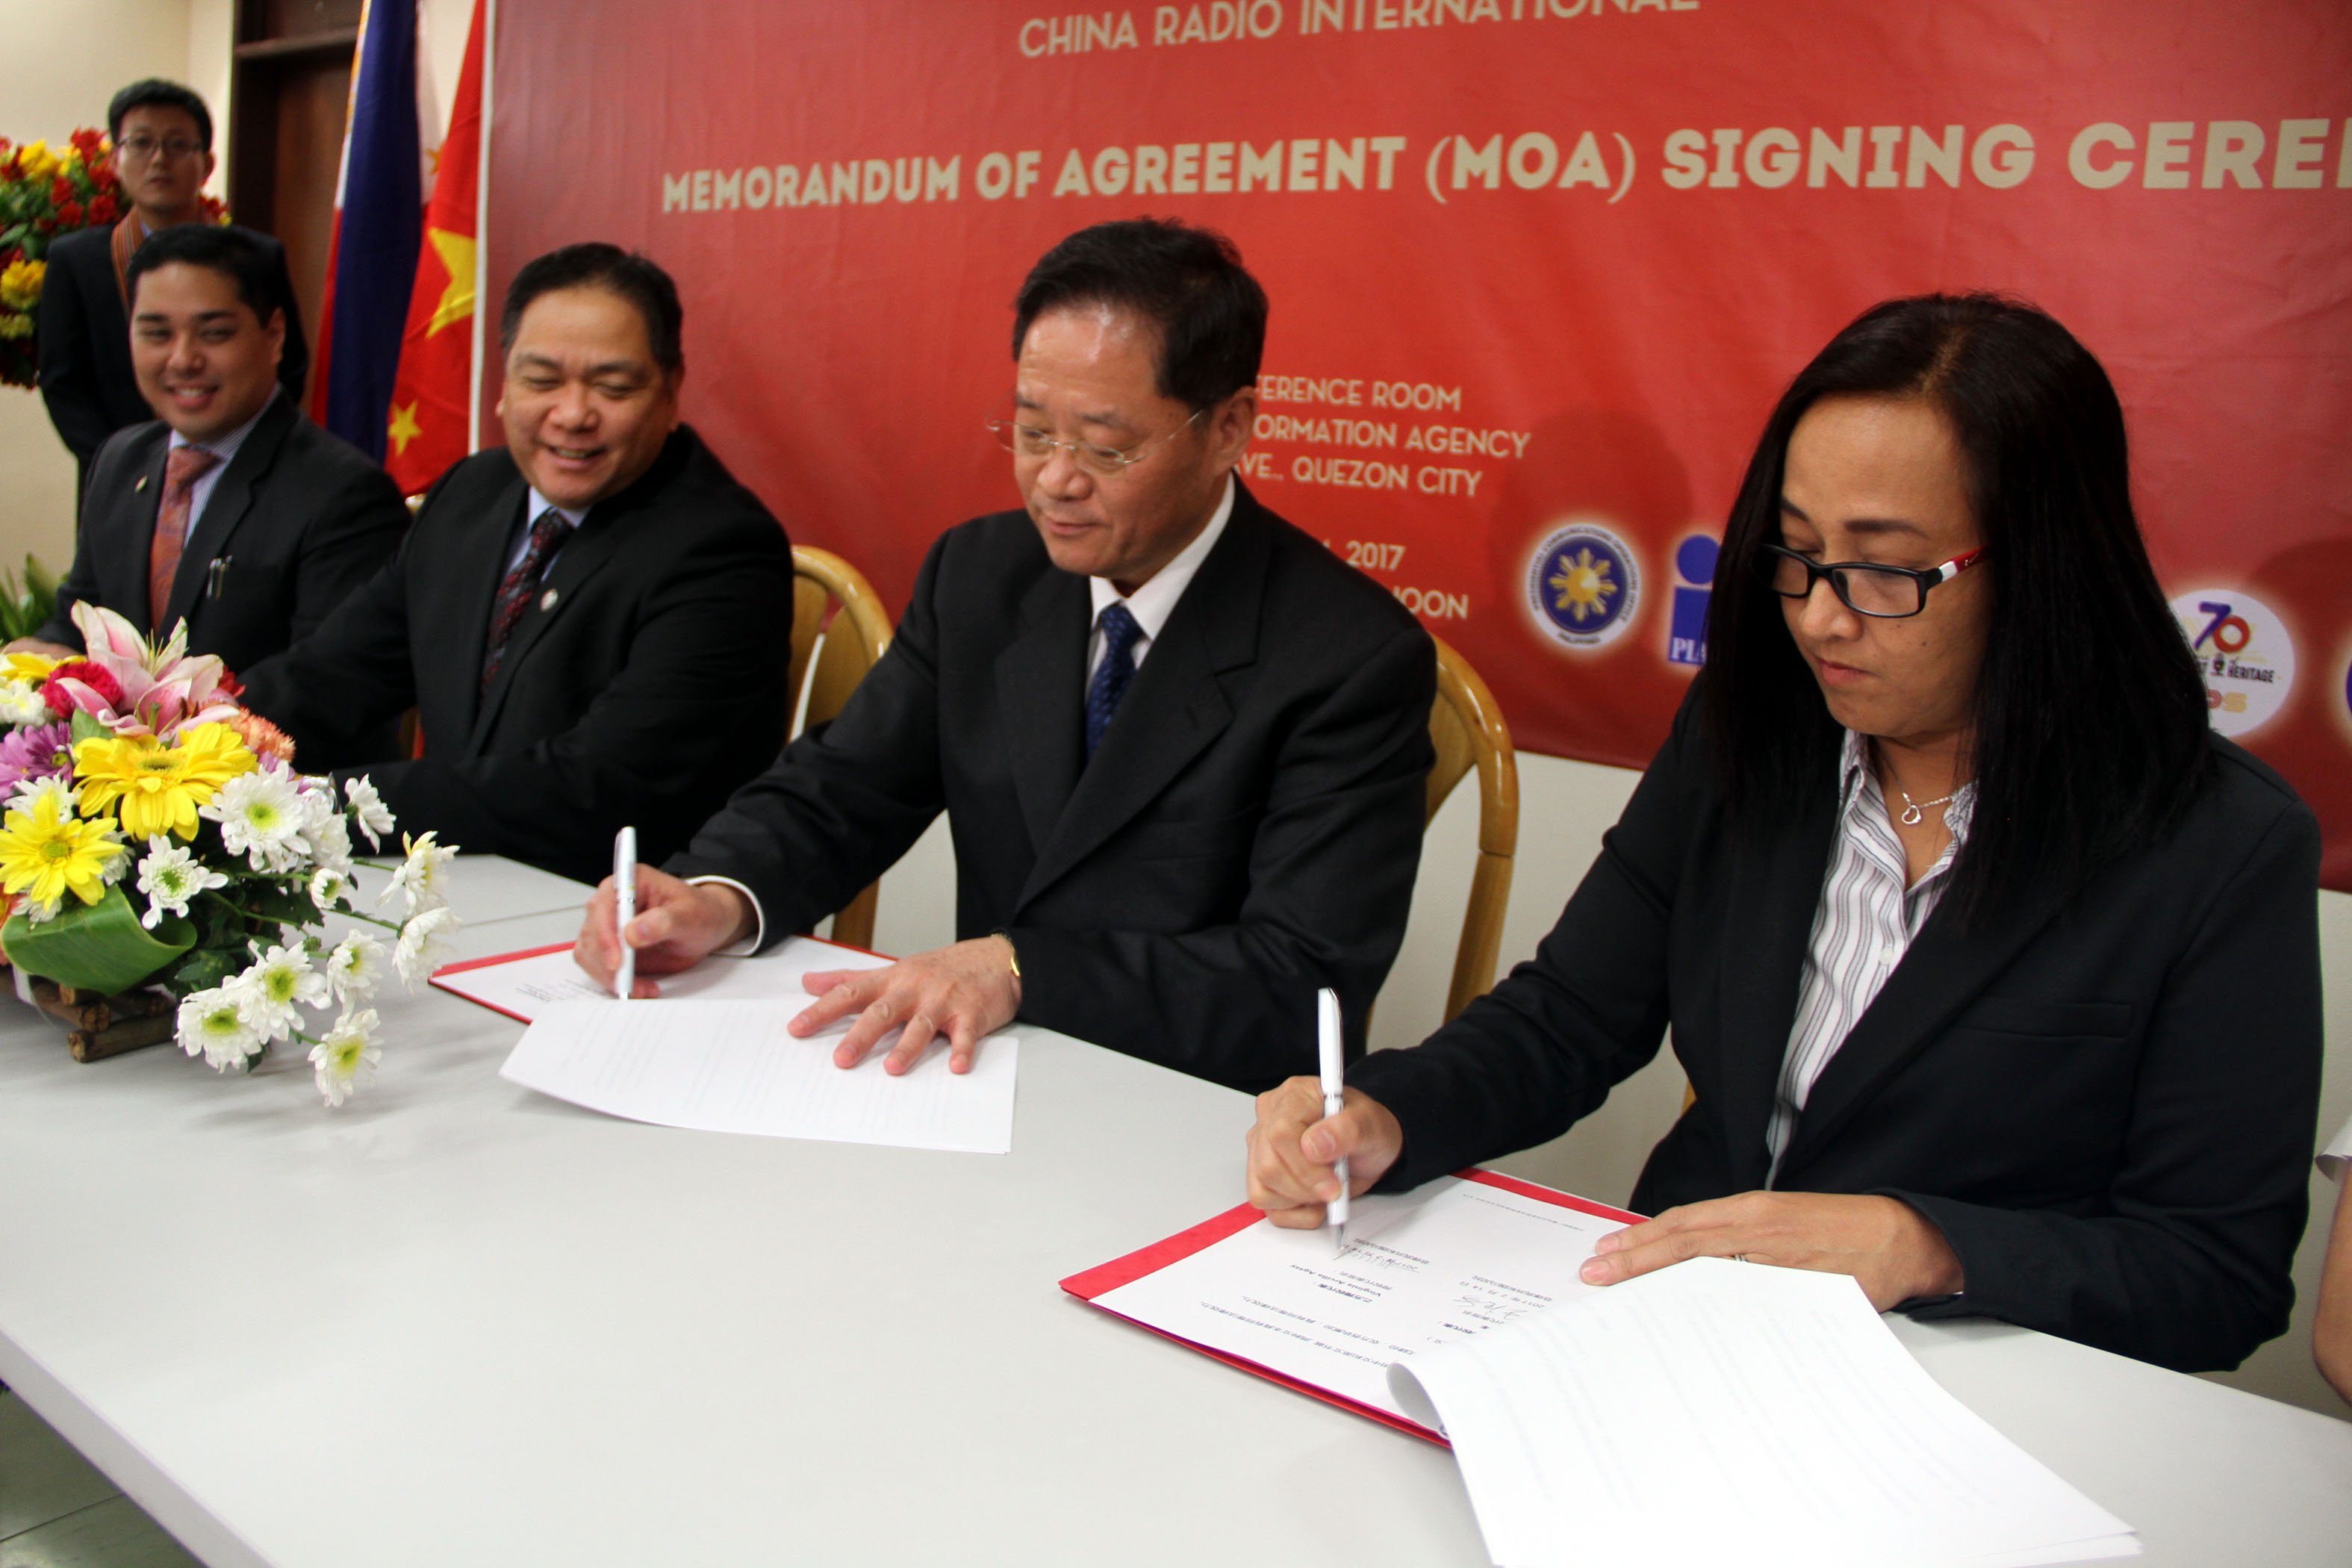 Memorandum of Agreement Signing with China Radio International